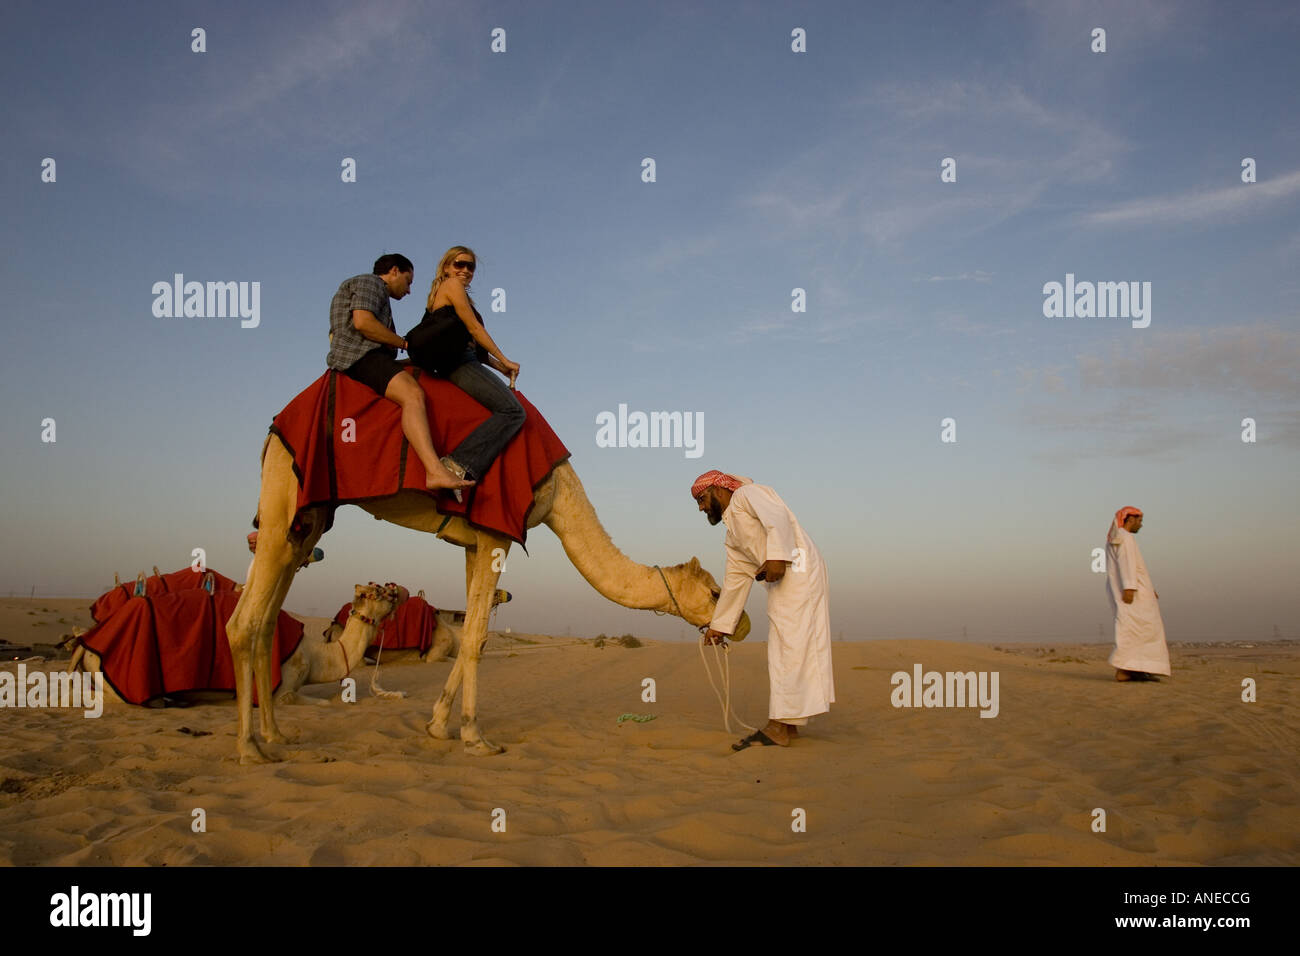 Tourists ride a camel during a safari in the desert in Dubai, UAE. Stock Photo